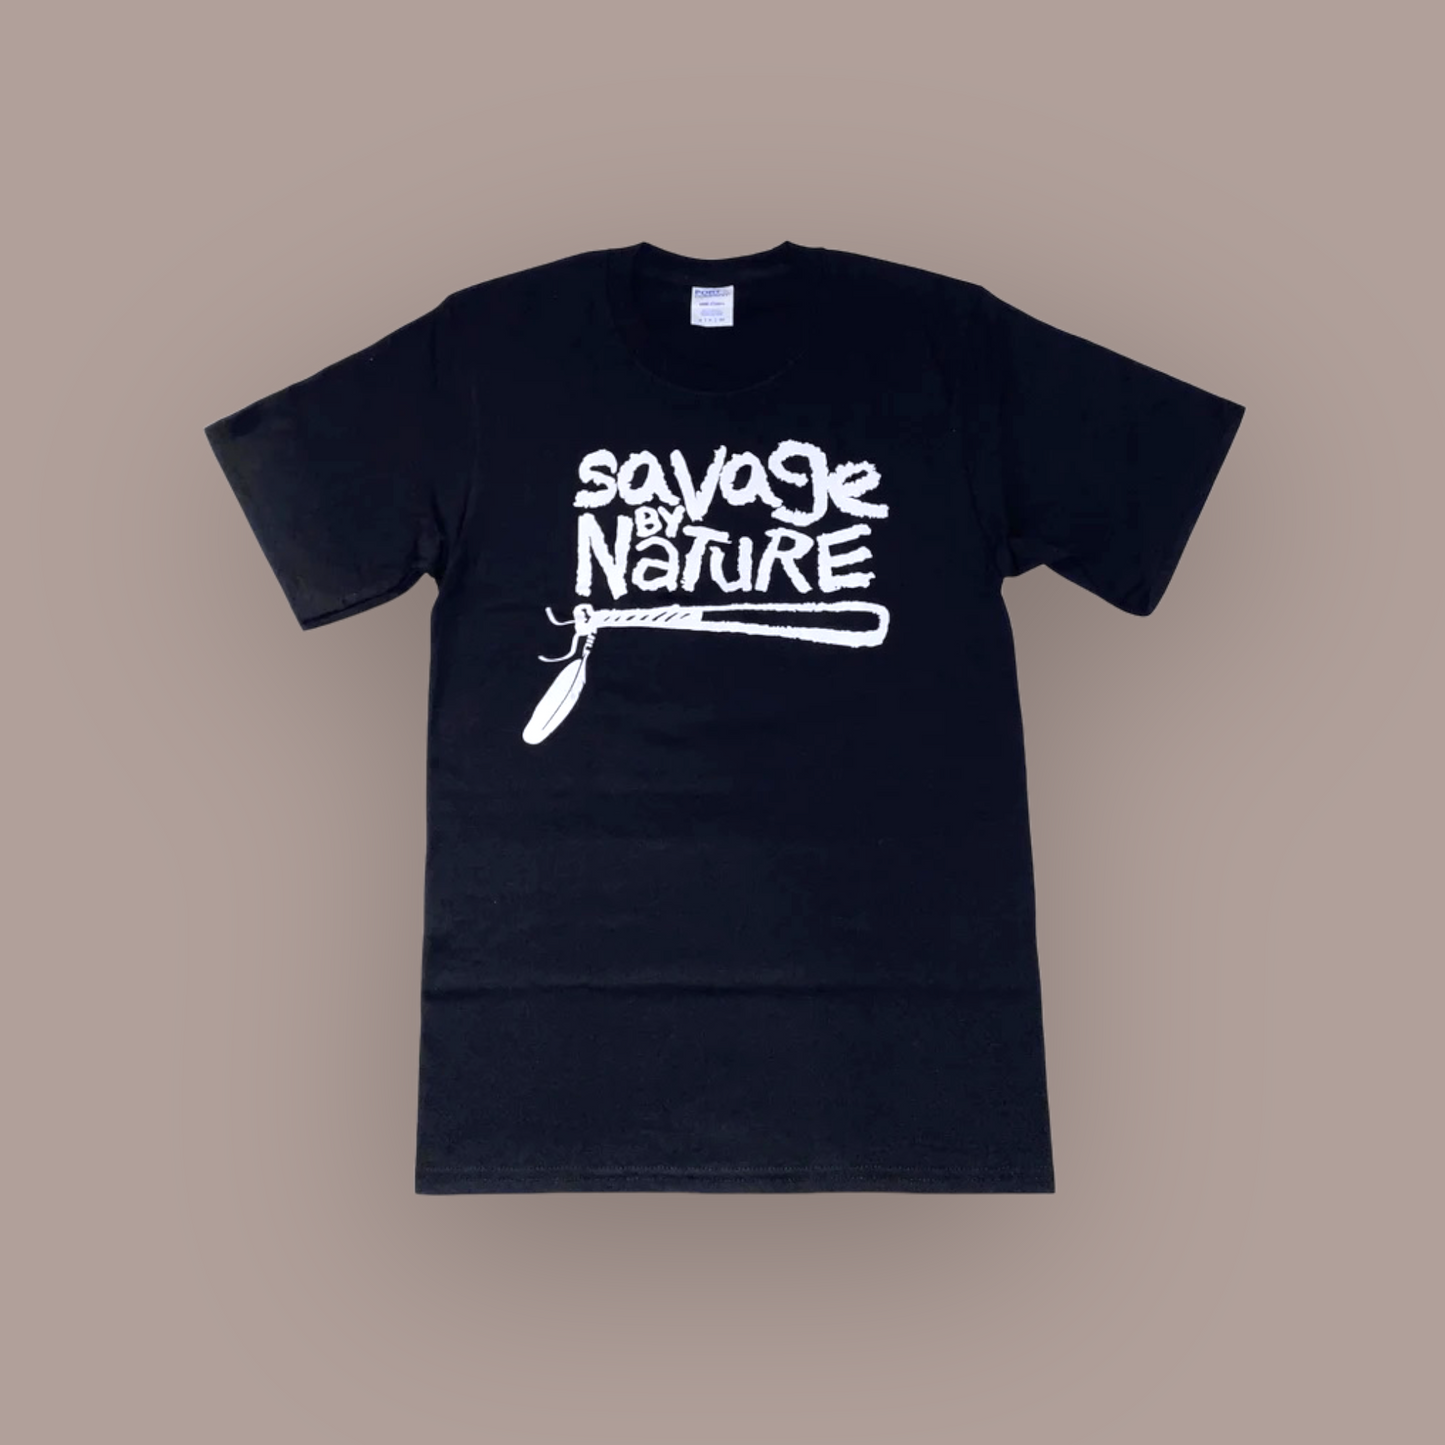 "Savage By Nature" Shirt (Black)